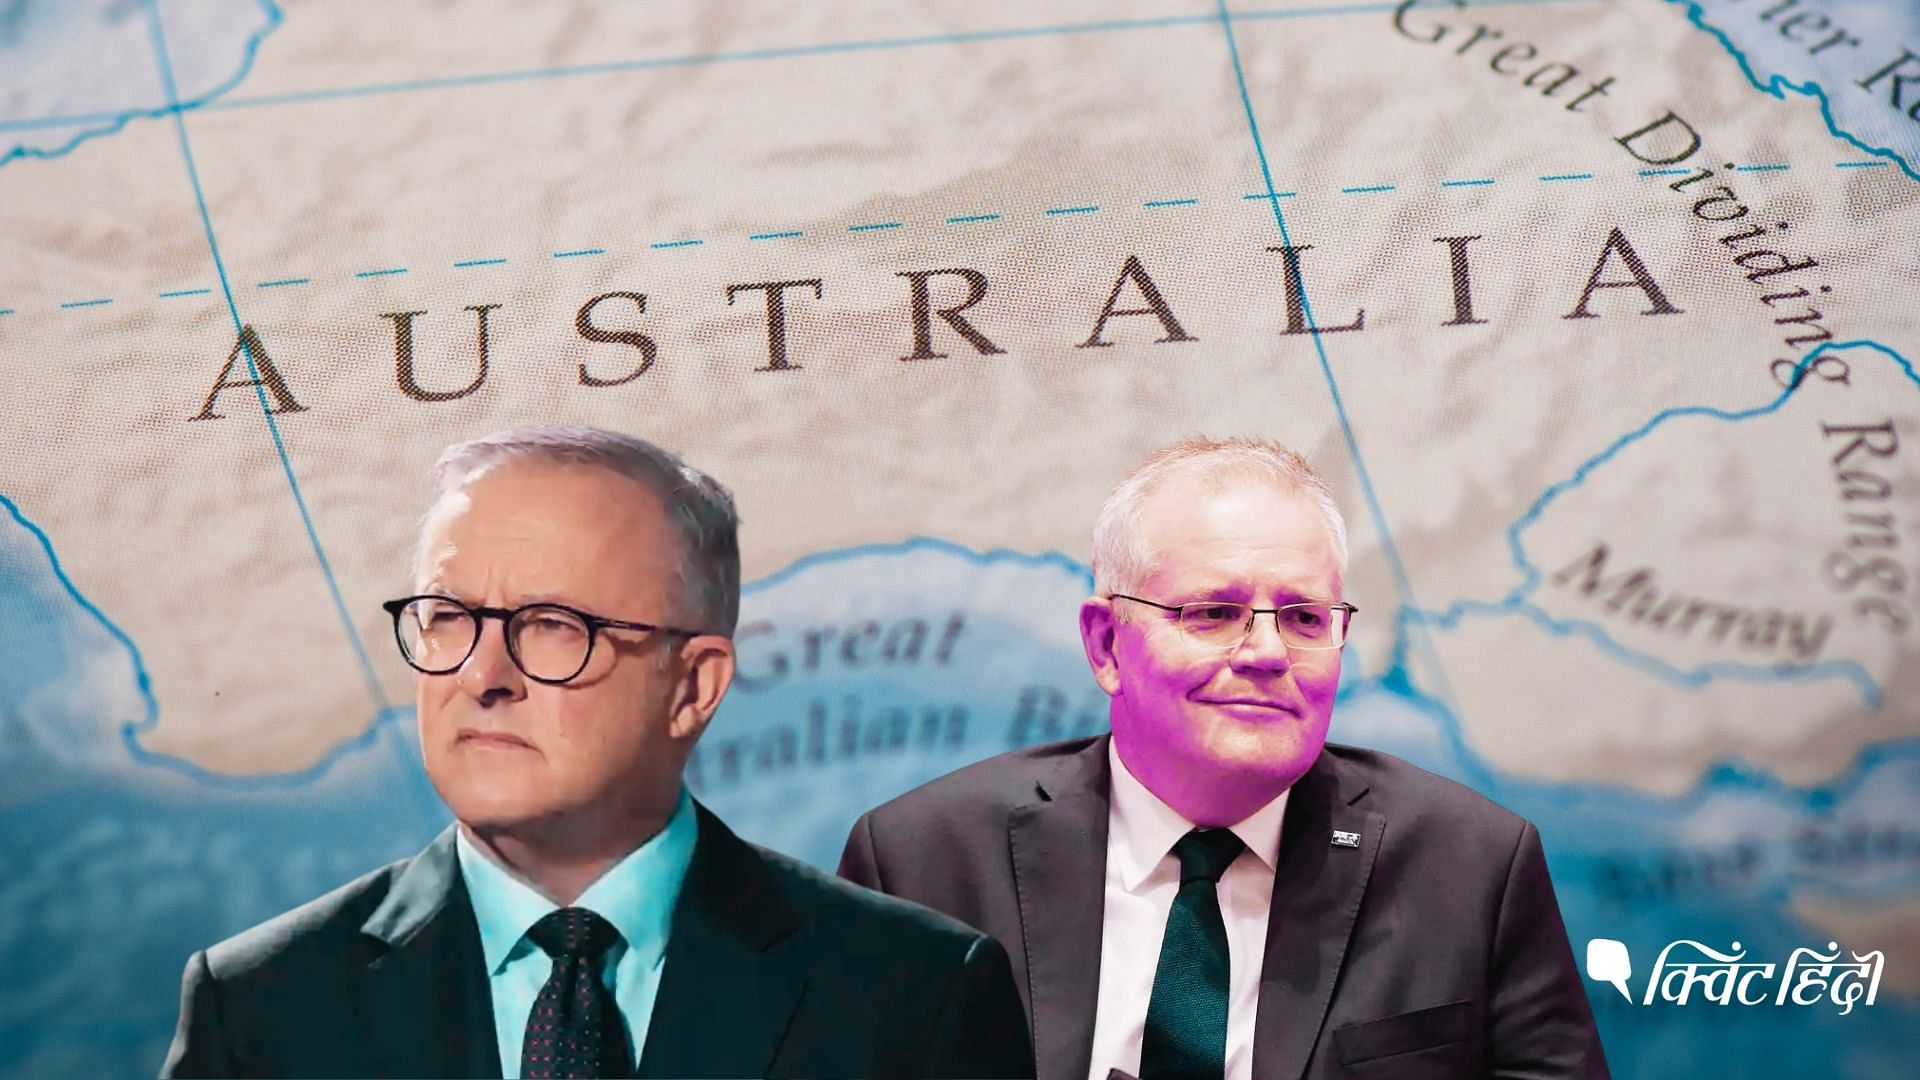 <div class="paragraphs"><p>Australia Elections 2022: 'फैमिली मैन' PM मॉरिसन को अनुभवी एंथनी अल्बनीज की चुनौती</p></div>